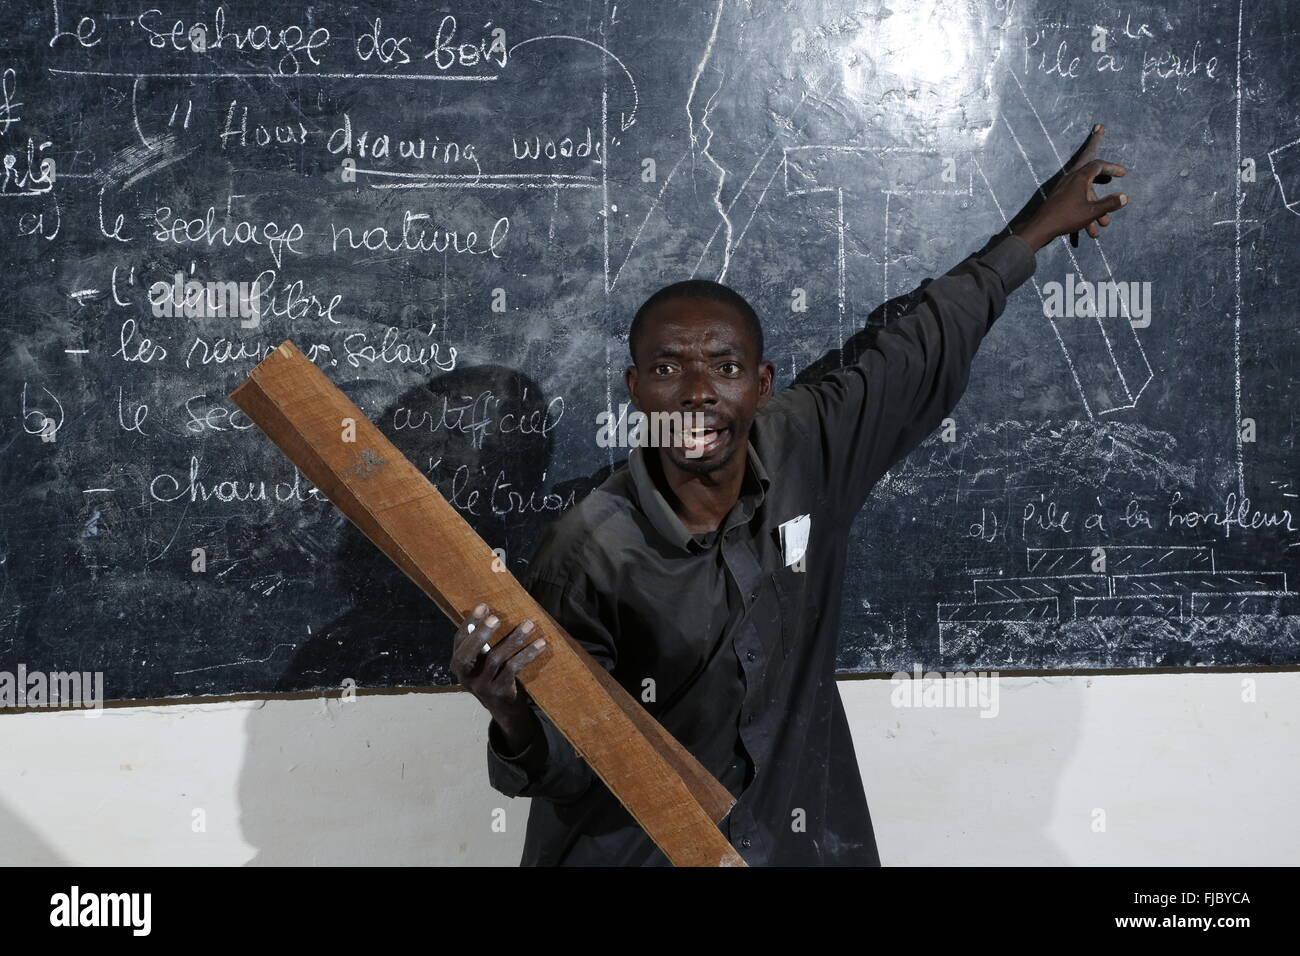 Teacher at blackboard, carpentry and joinery workshop, Matamba-Solo, Bandundu Province, Republic of the Congo Stock Photo